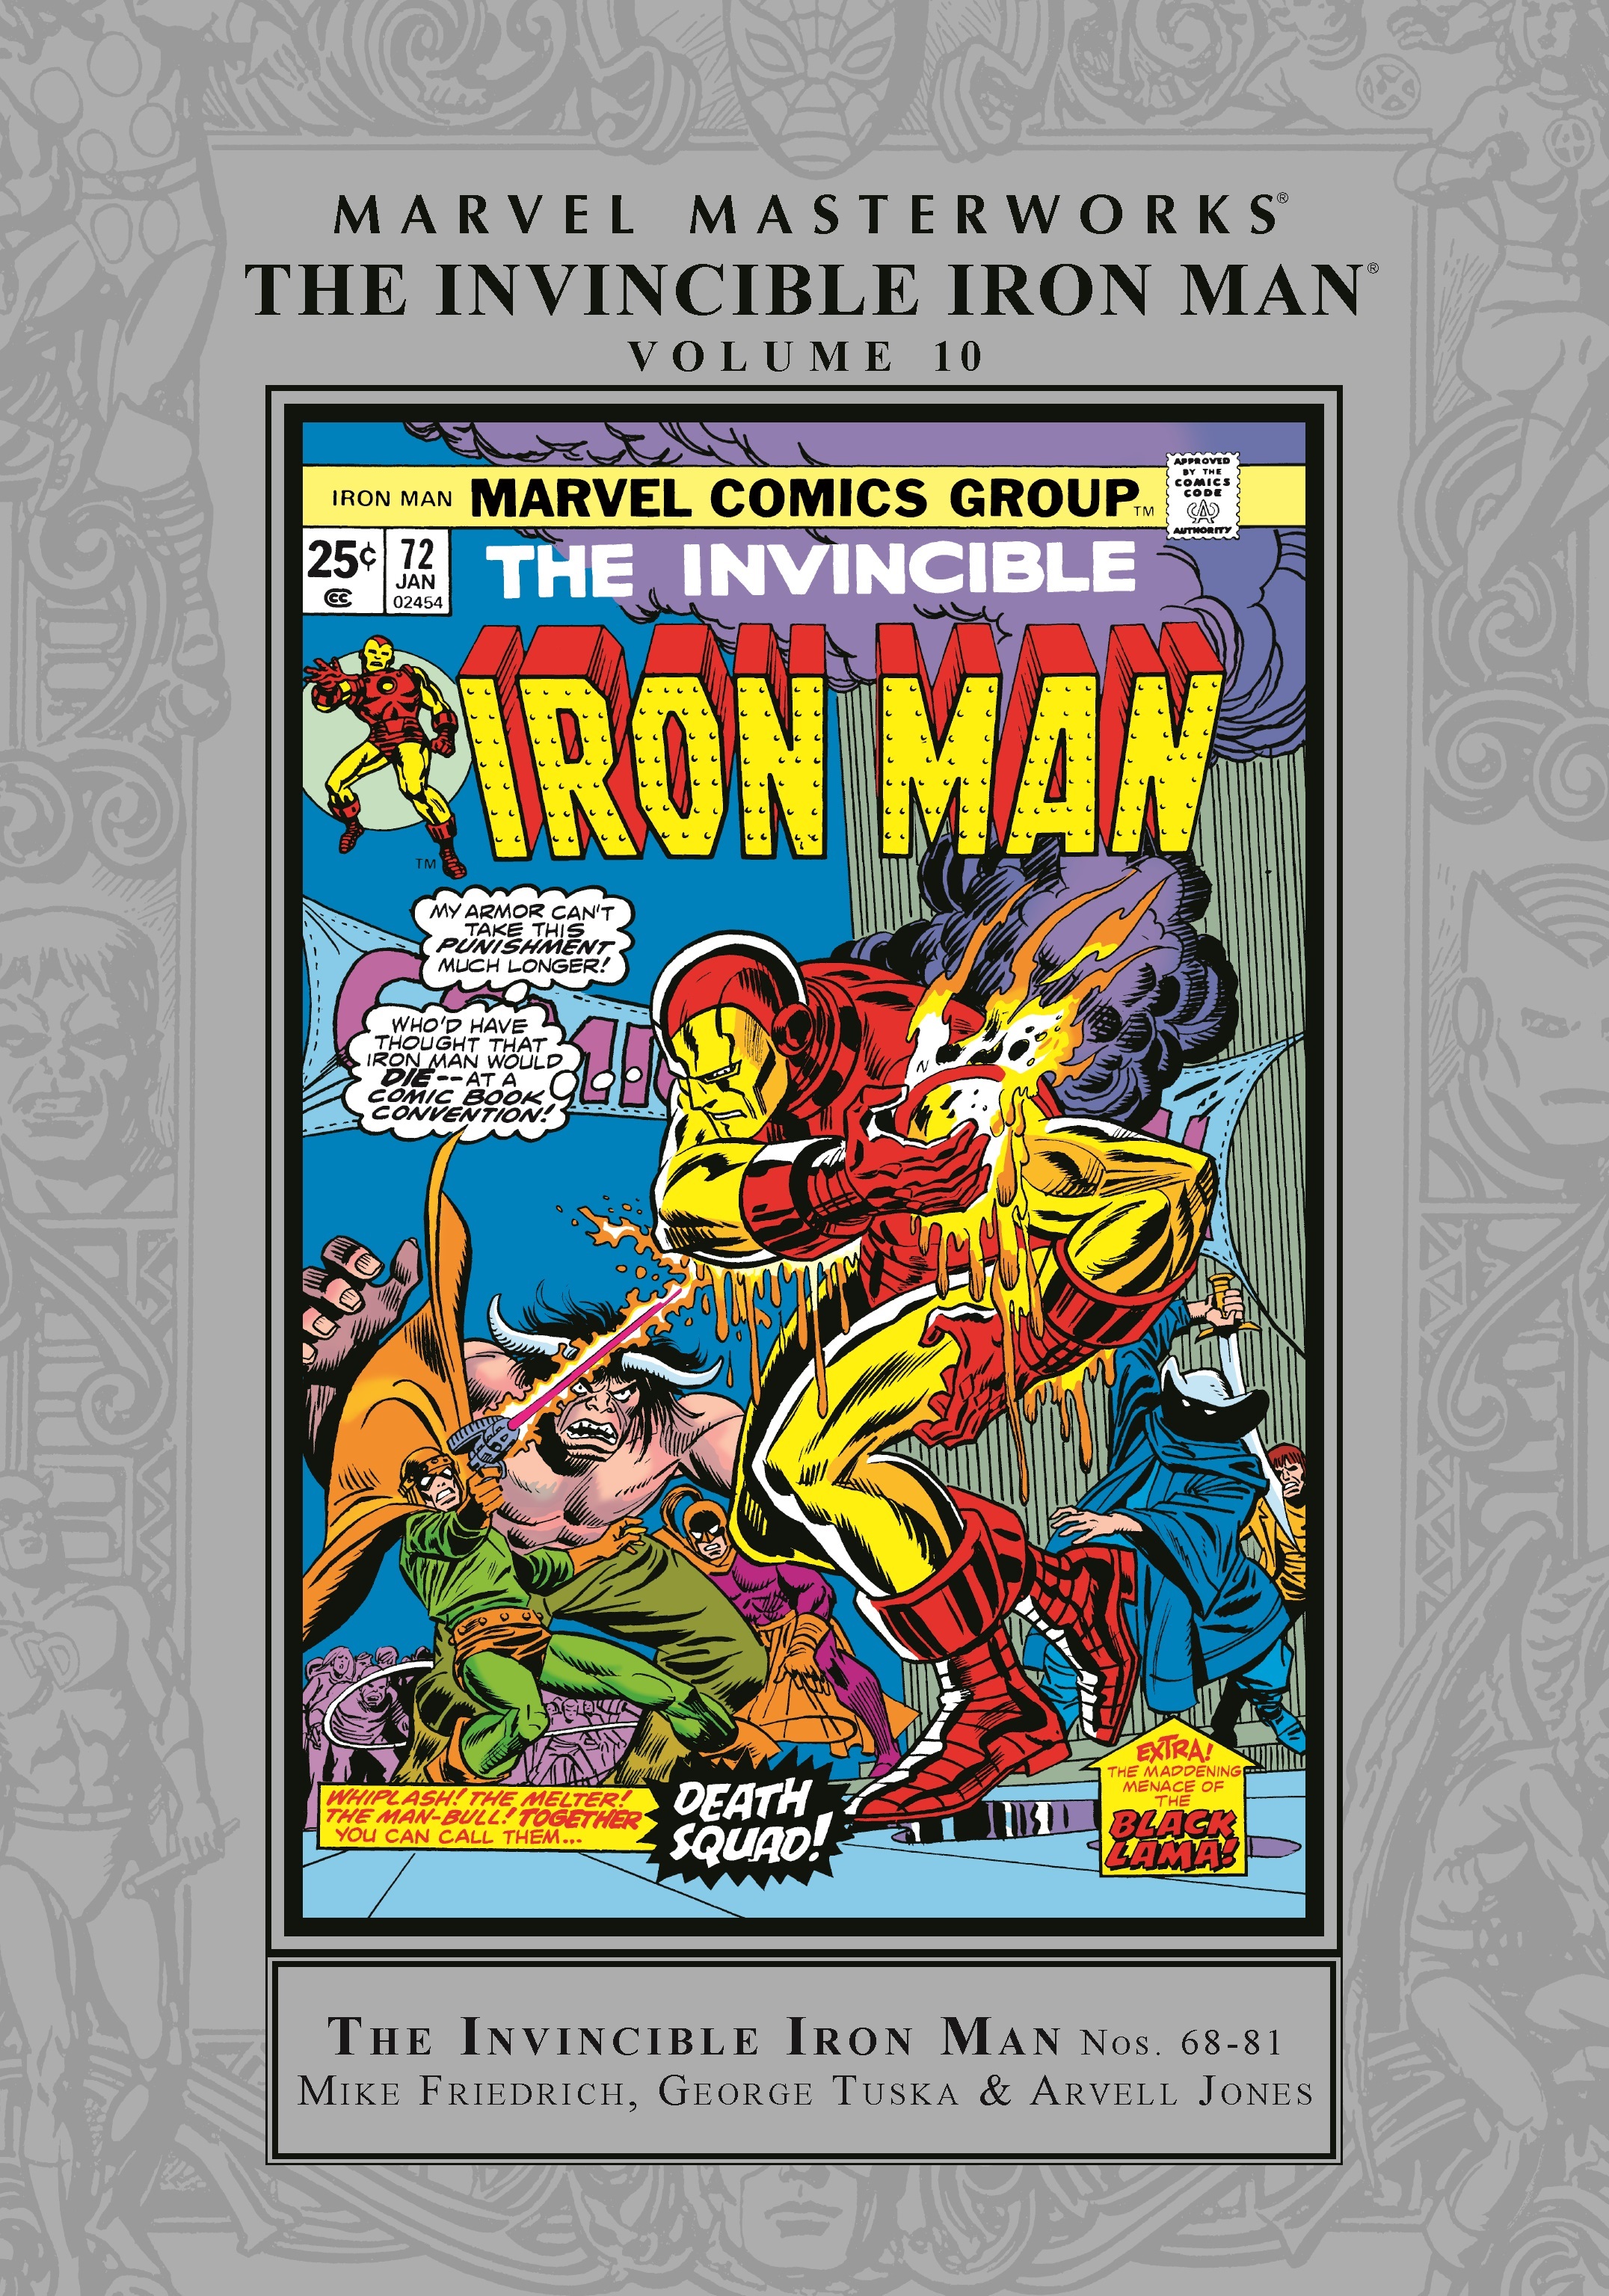 Marvel Masterworks: The Invincible Iron Man Vol. 10 (Hardcover)